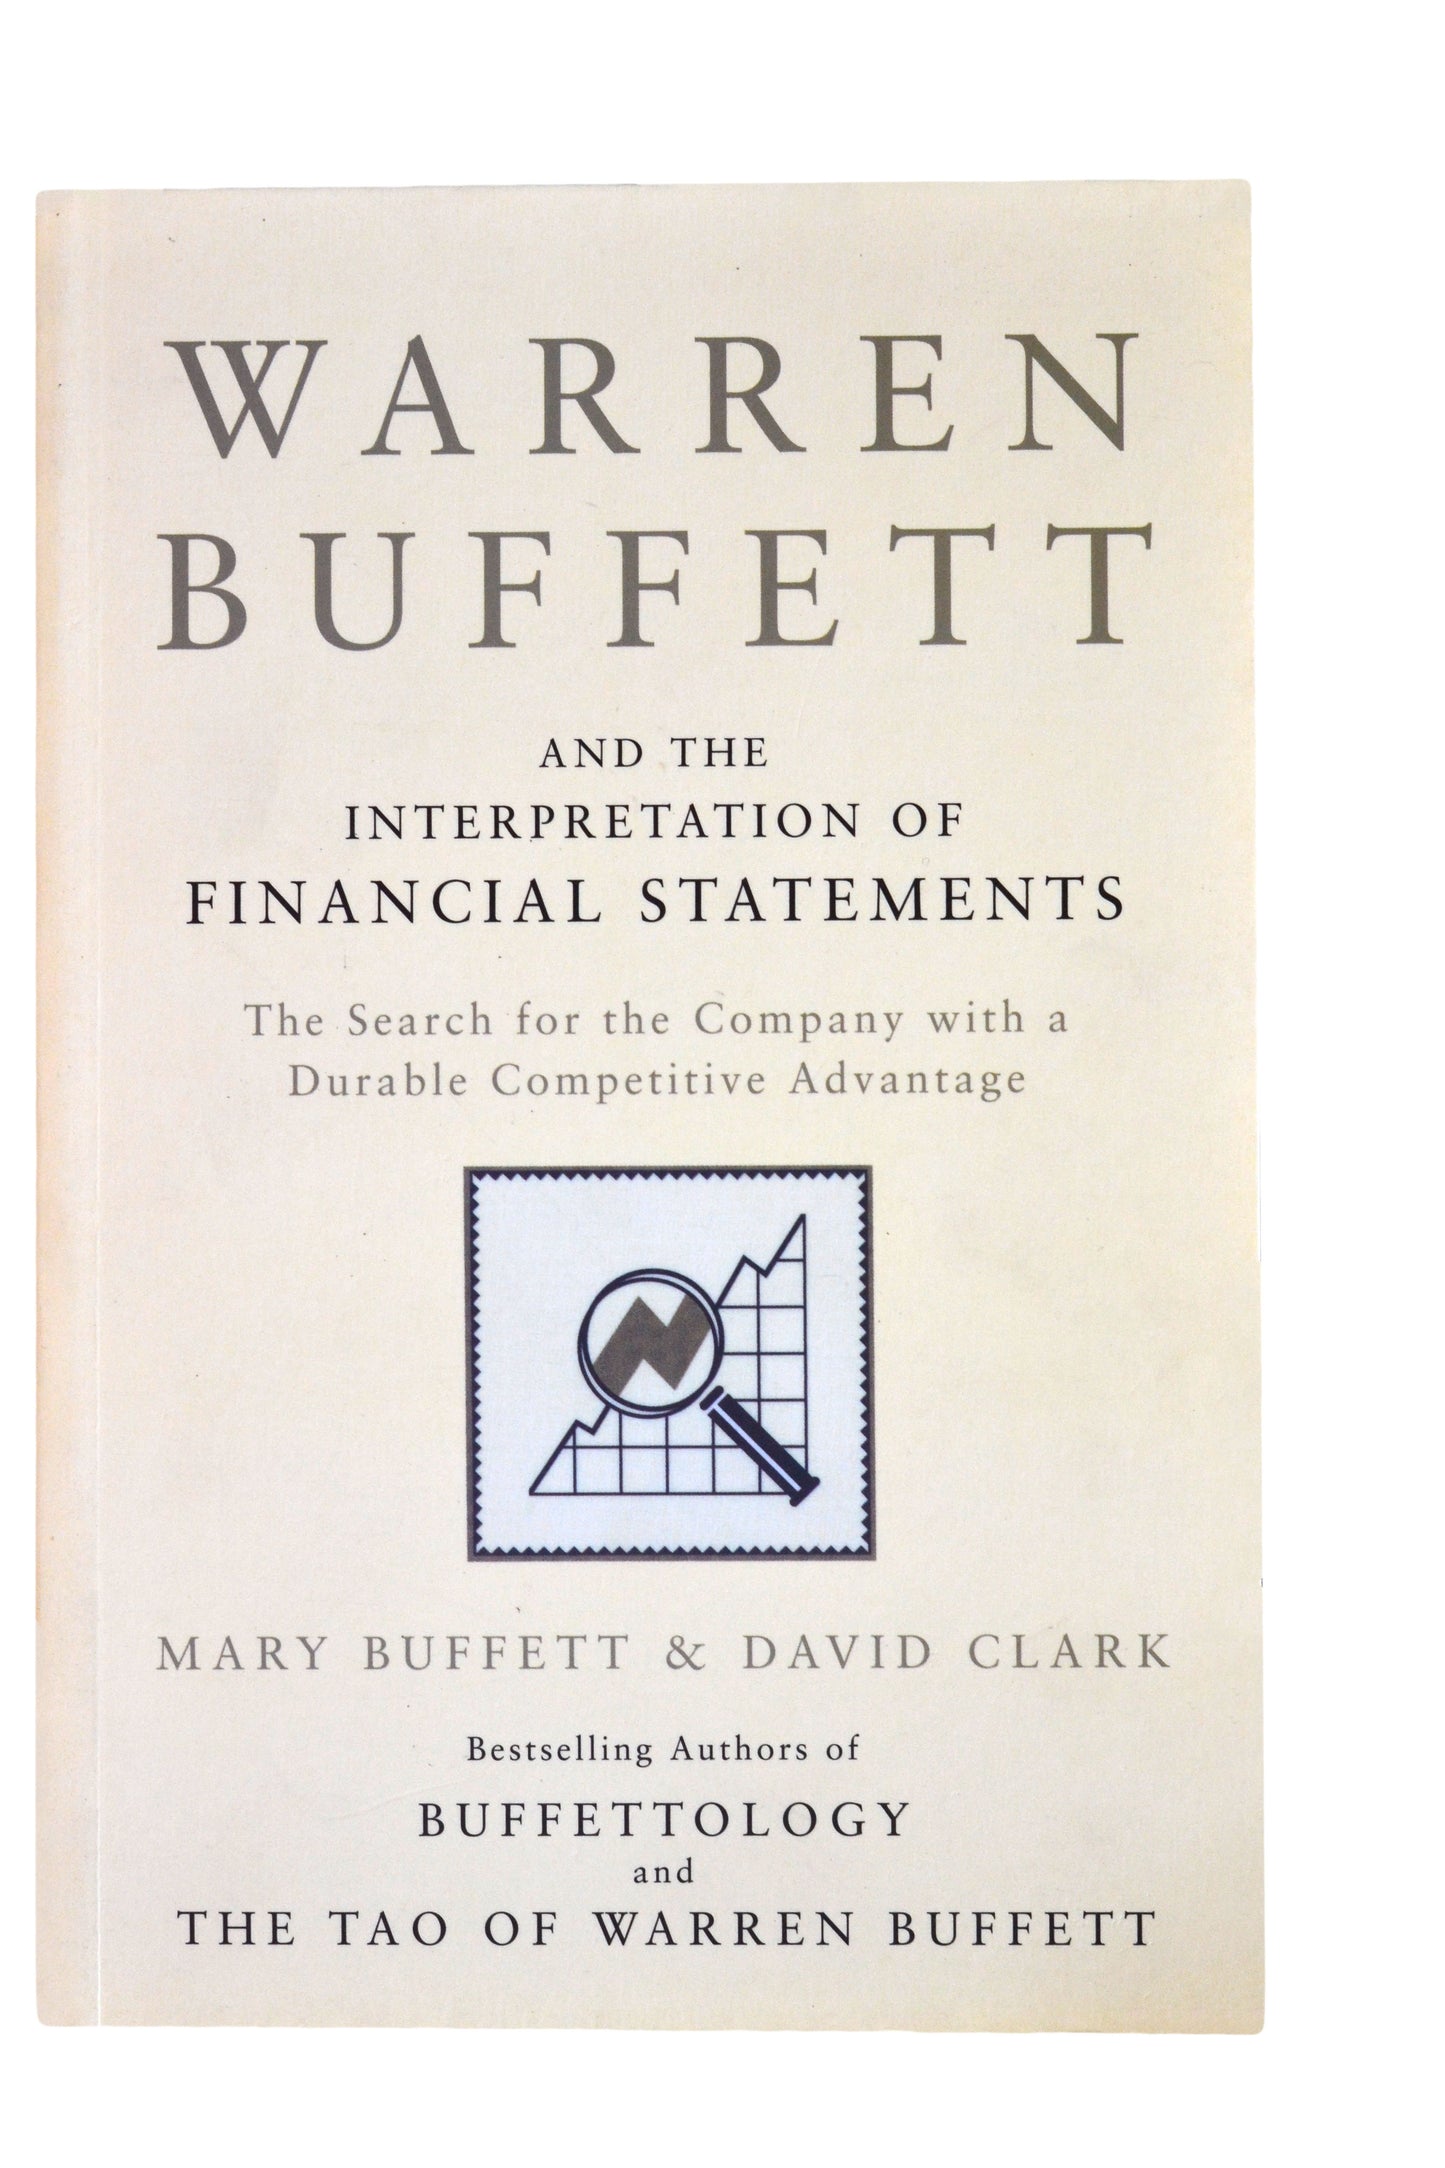 WARREN BUFFETT and THE INTERPRETATION OF FINANCIAL STATEMENTS